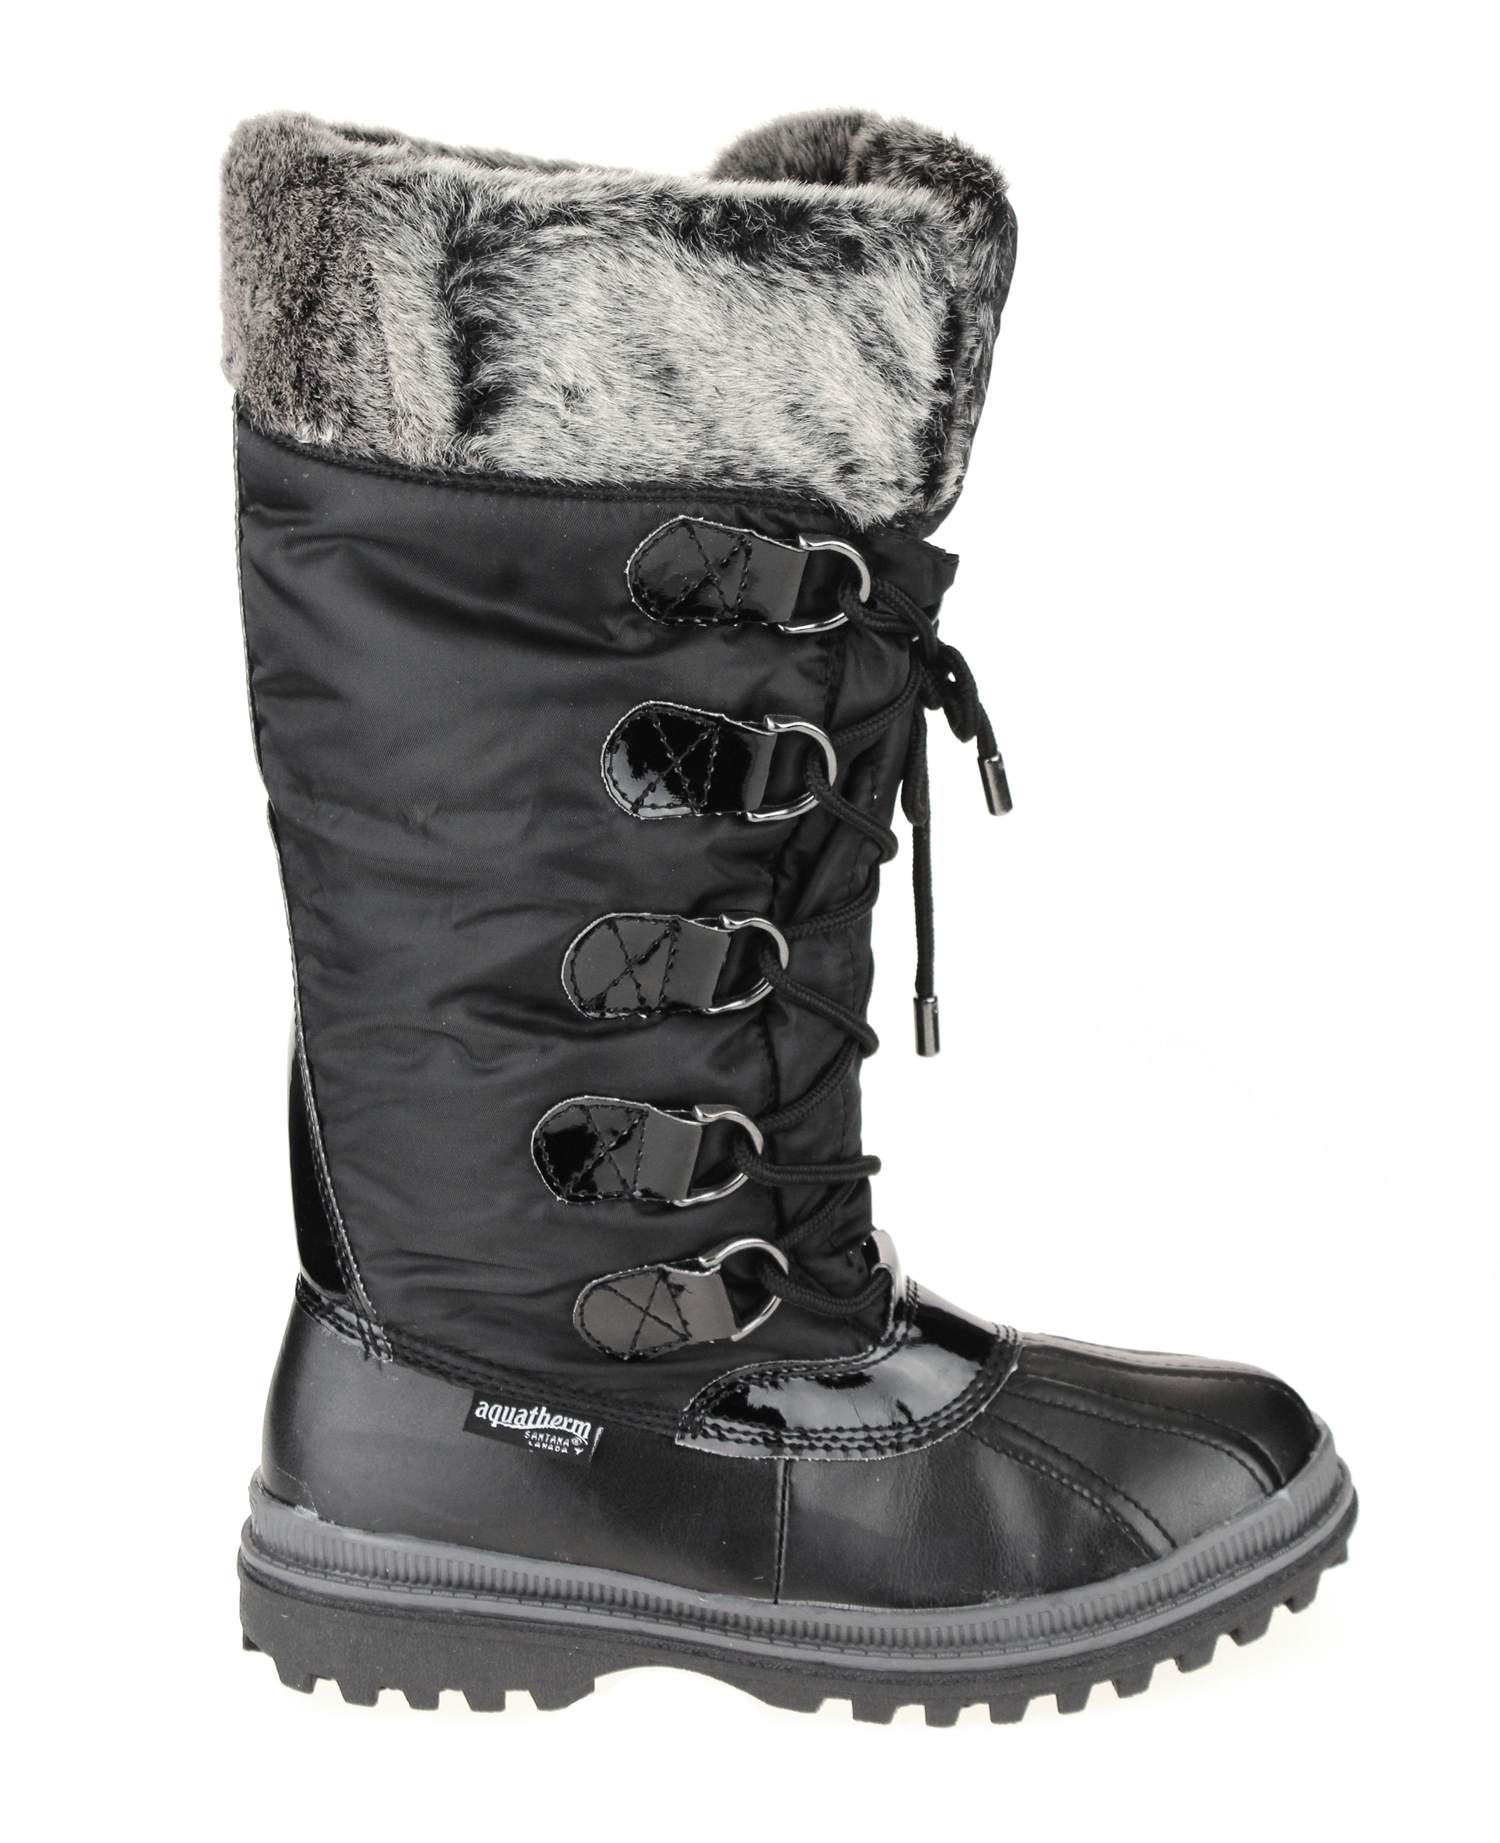 Aquatherm by Santana Canada Women's Birch Winter Snow Boots - Black | eBay